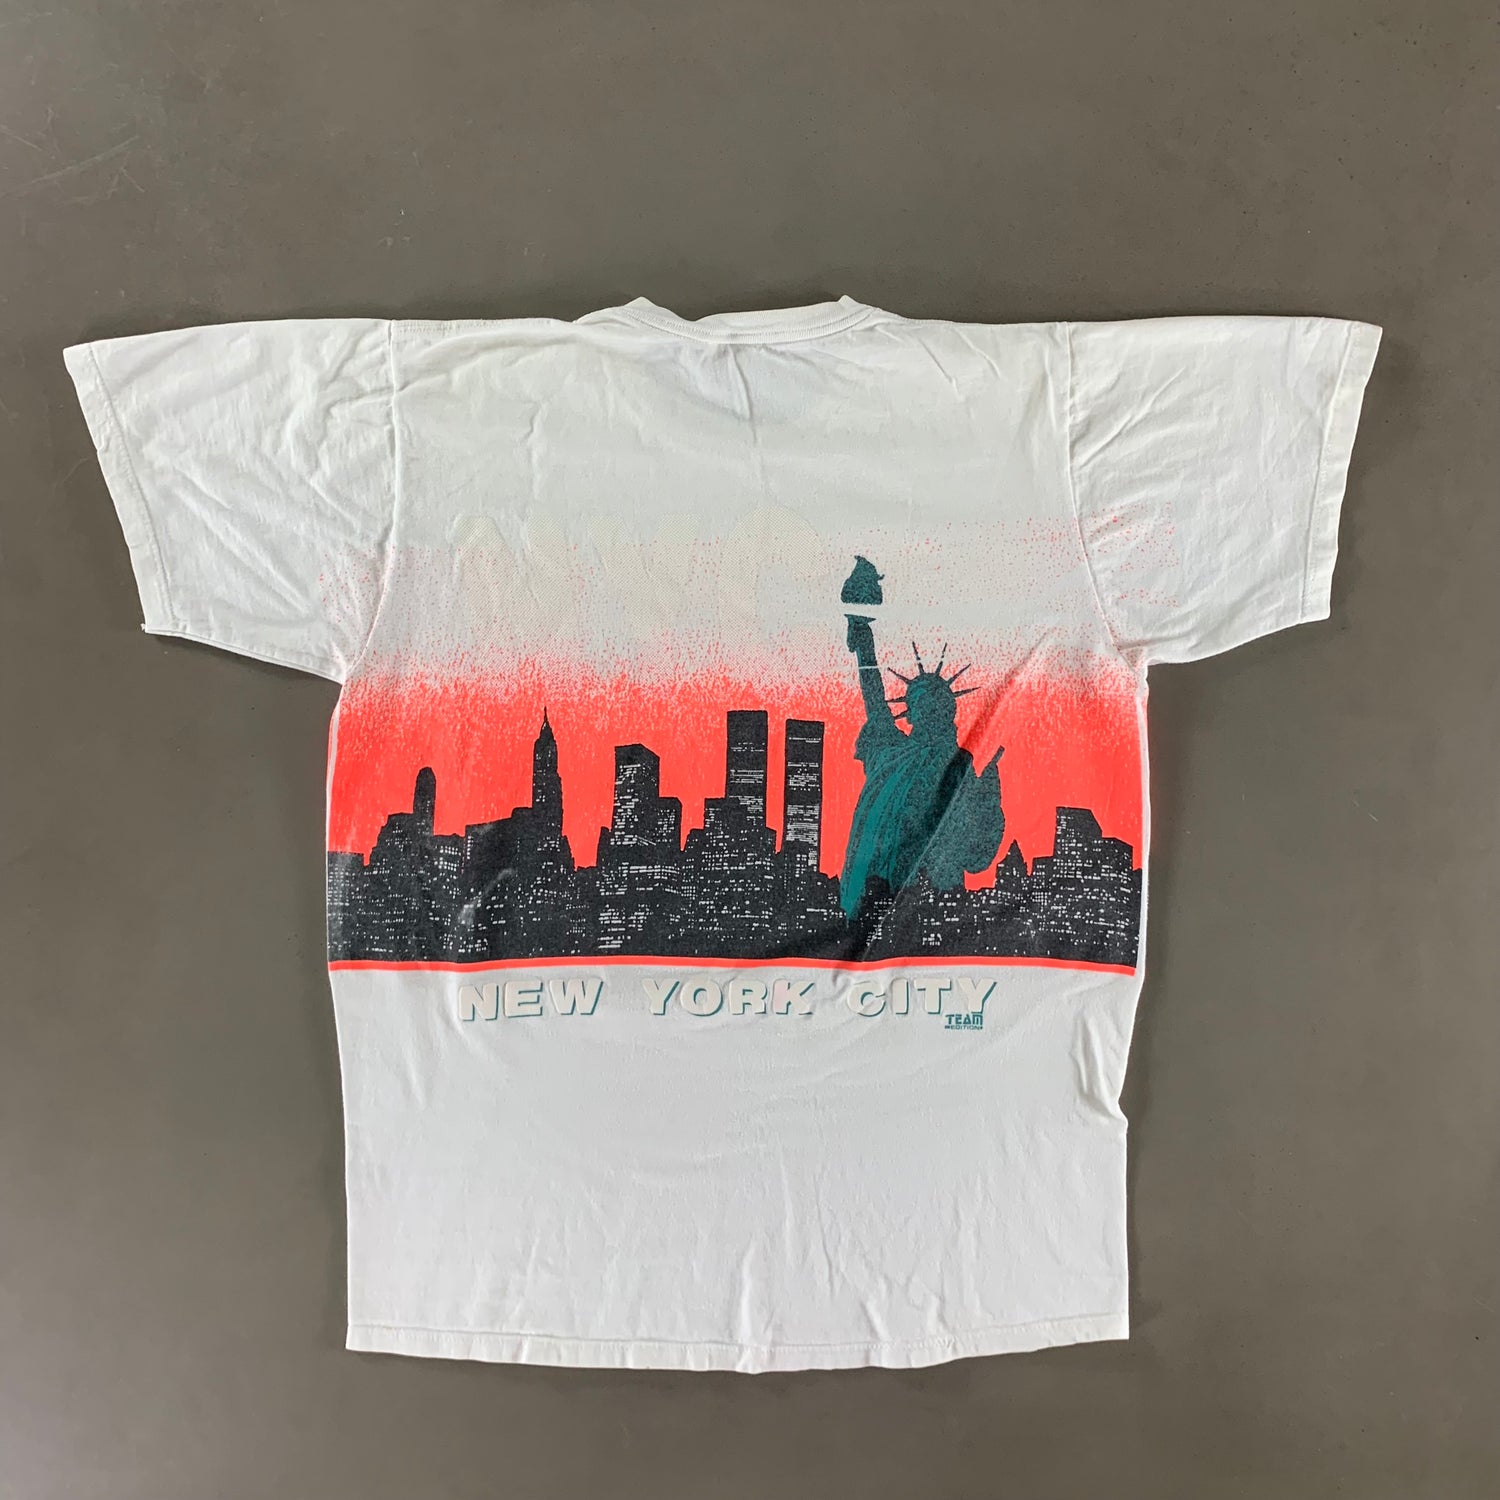 Vintage 1990s New York City T-shirt size Large